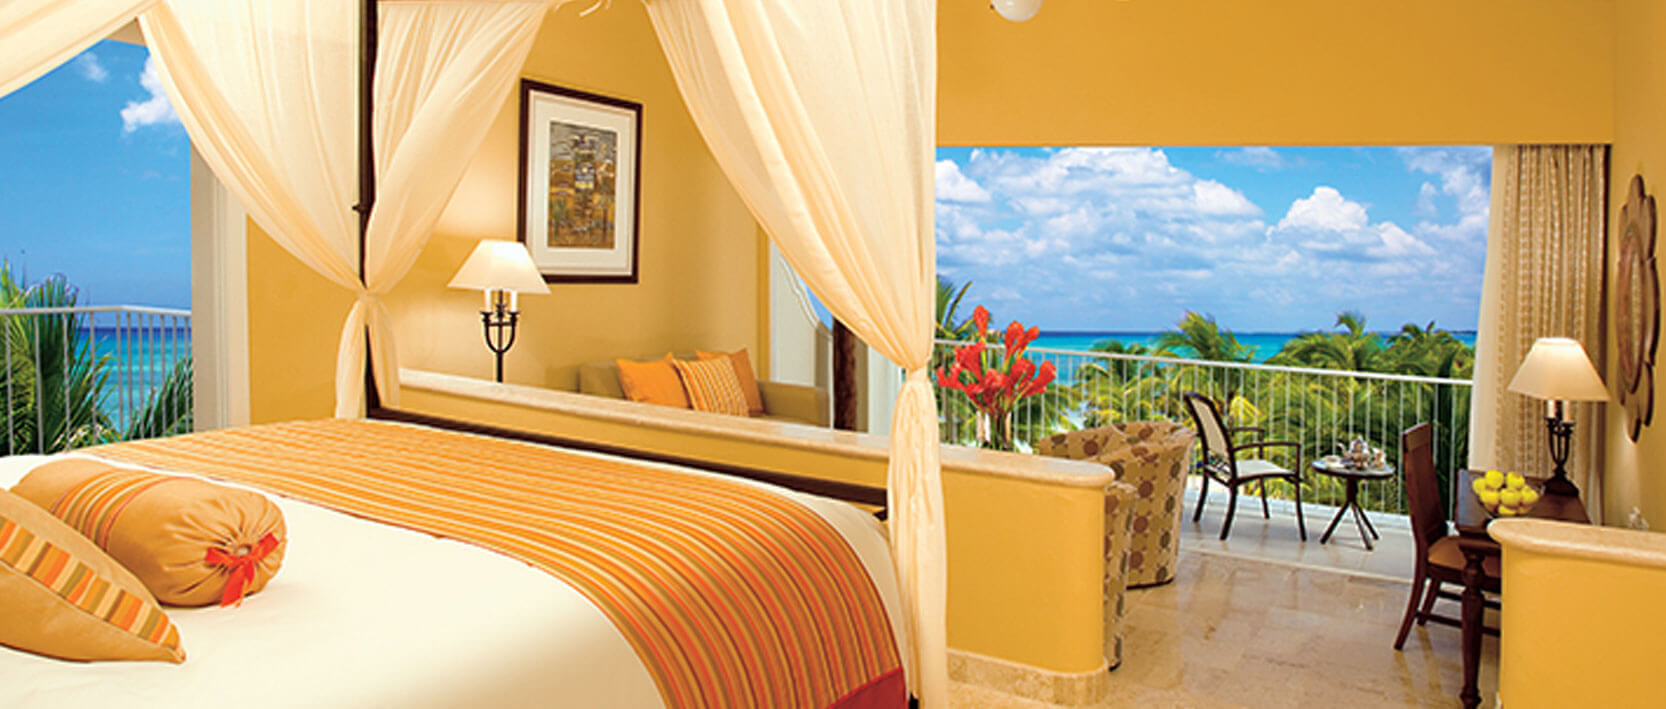 Dreams Tulum Resort Accommodations - Preferred Club Honeymoon Suite Ocean View